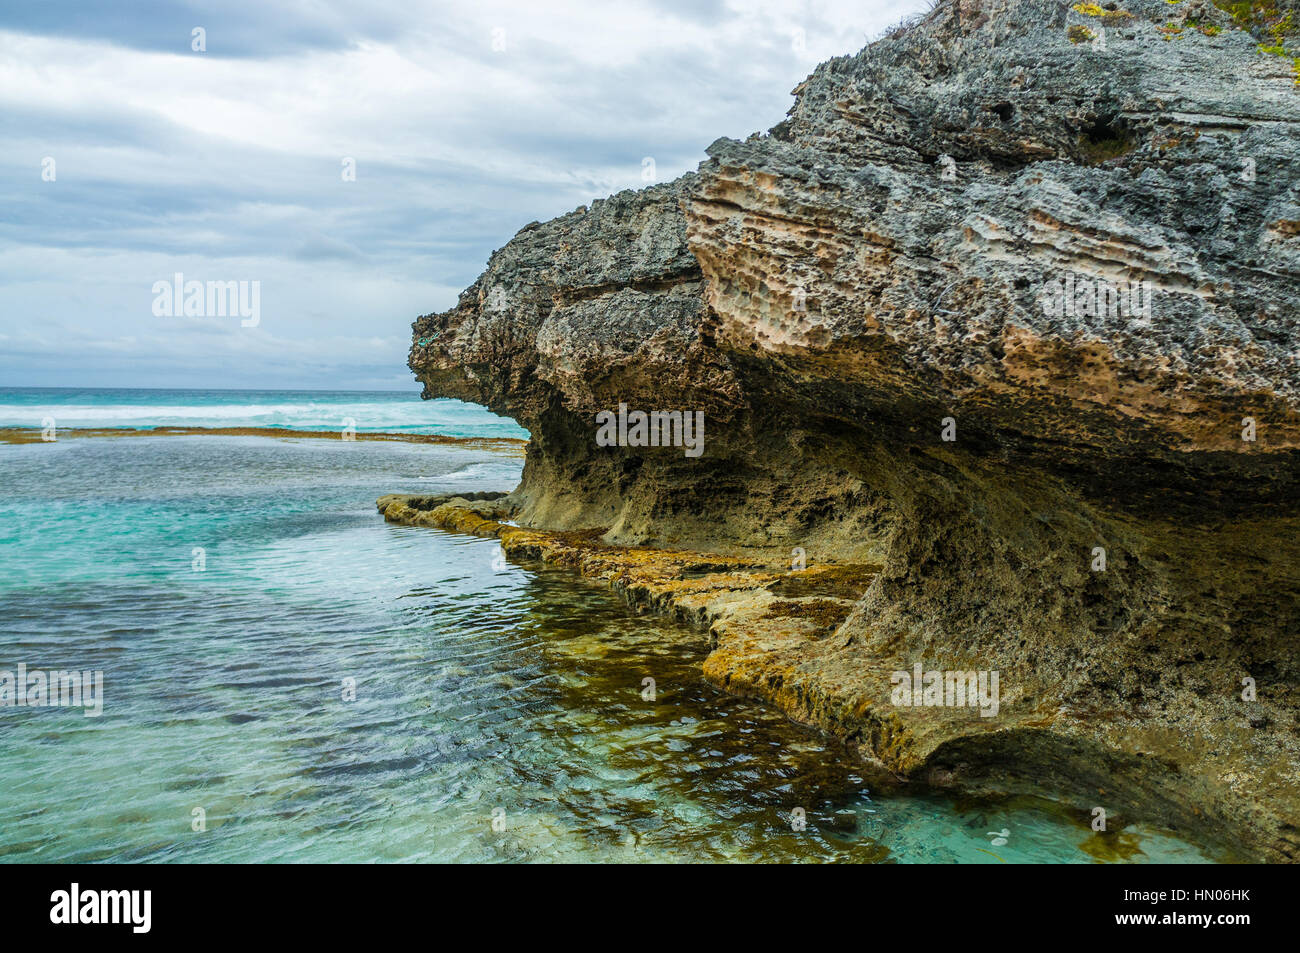 Beautiful eroded rock and ocean at Pennington Bay, Kangaroo Island, South Australia. Stock Photo